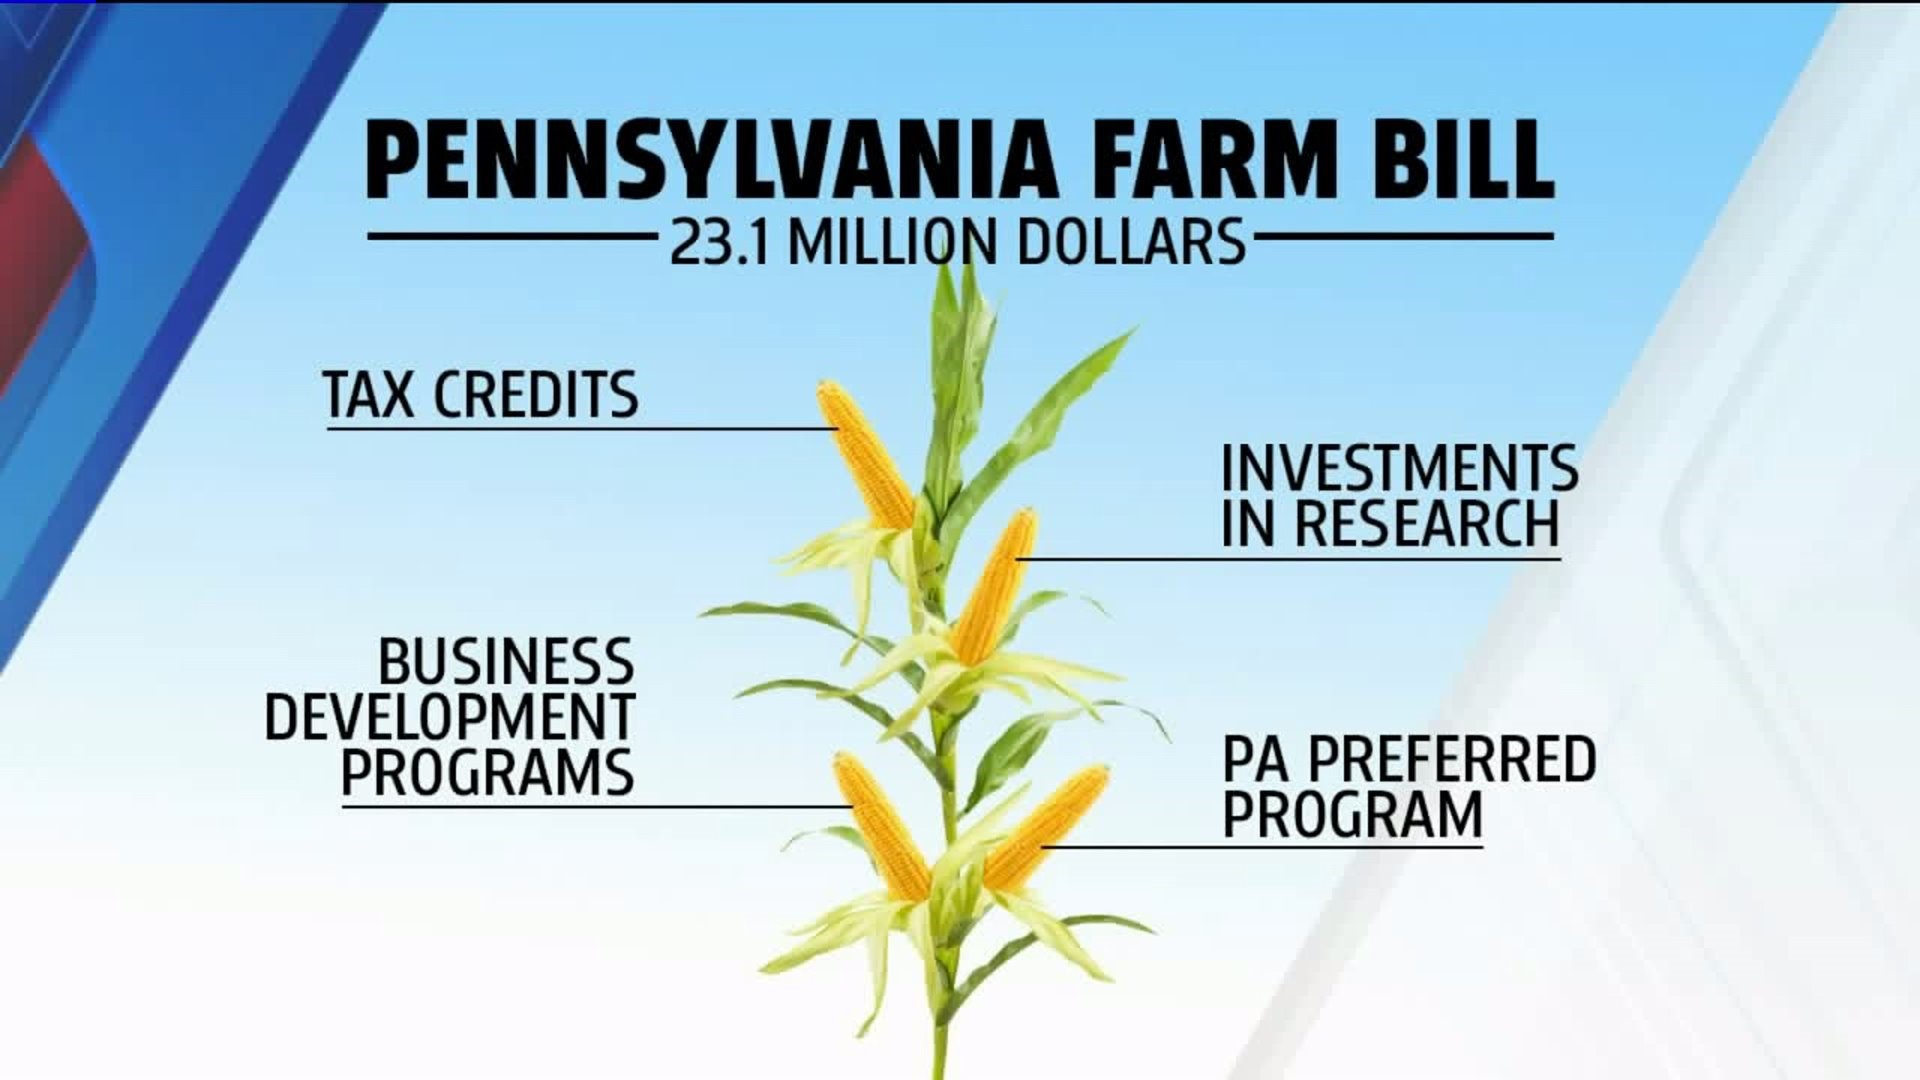 Imagine The Opportunities: How the PA Farm Show Highlights the Pennsylvania Farm Bill